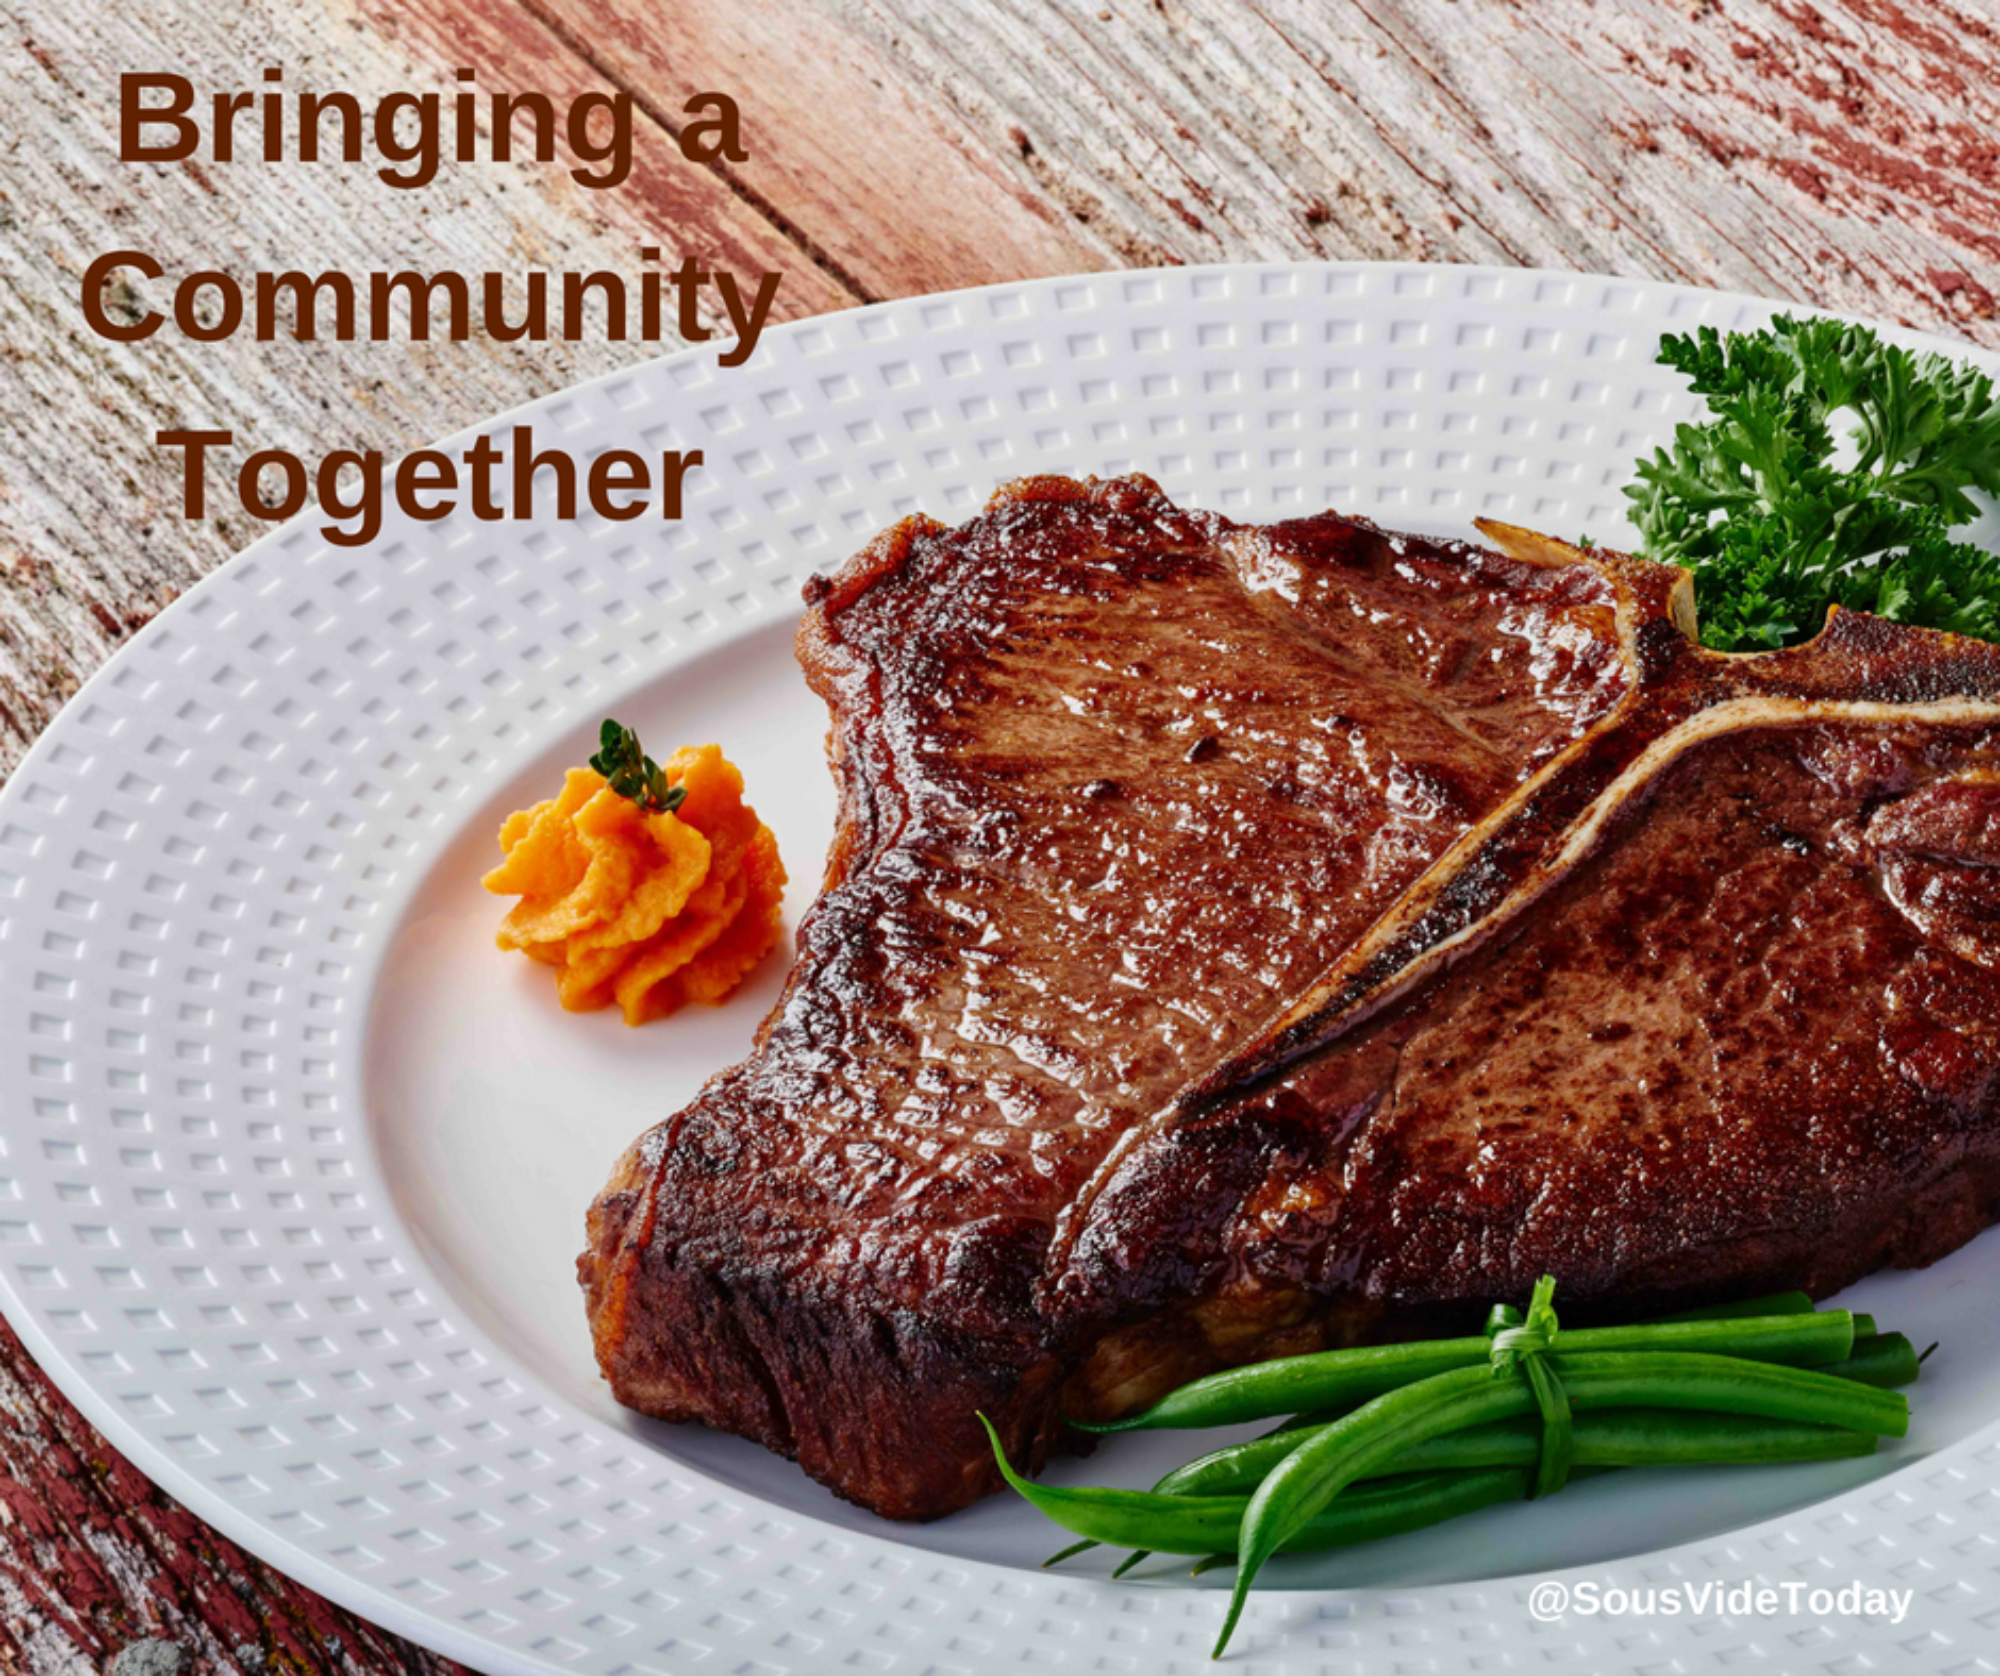 Bringing a Community Together